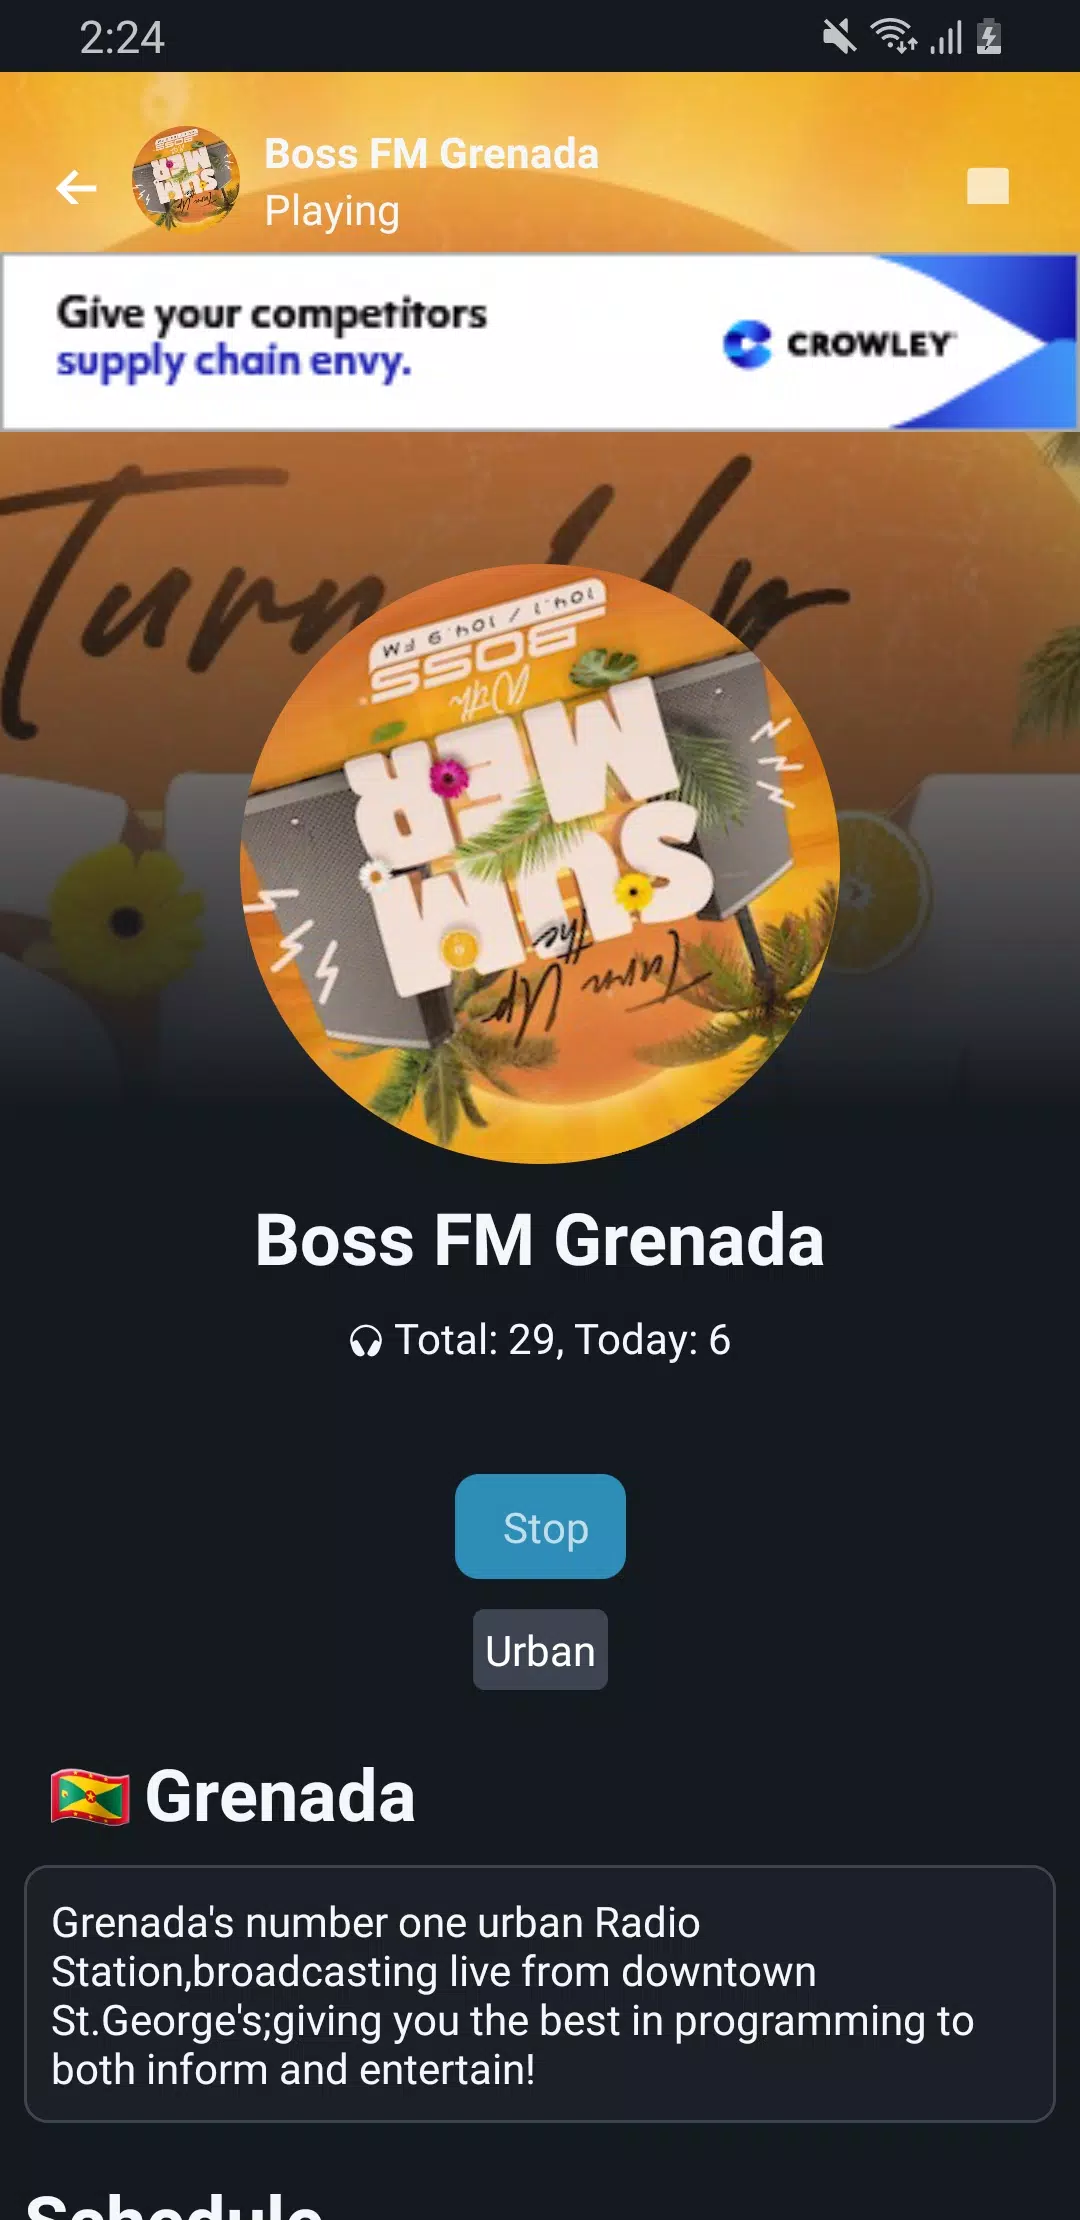 Island Vibe - Caribbean Radio - Apps on Google Play